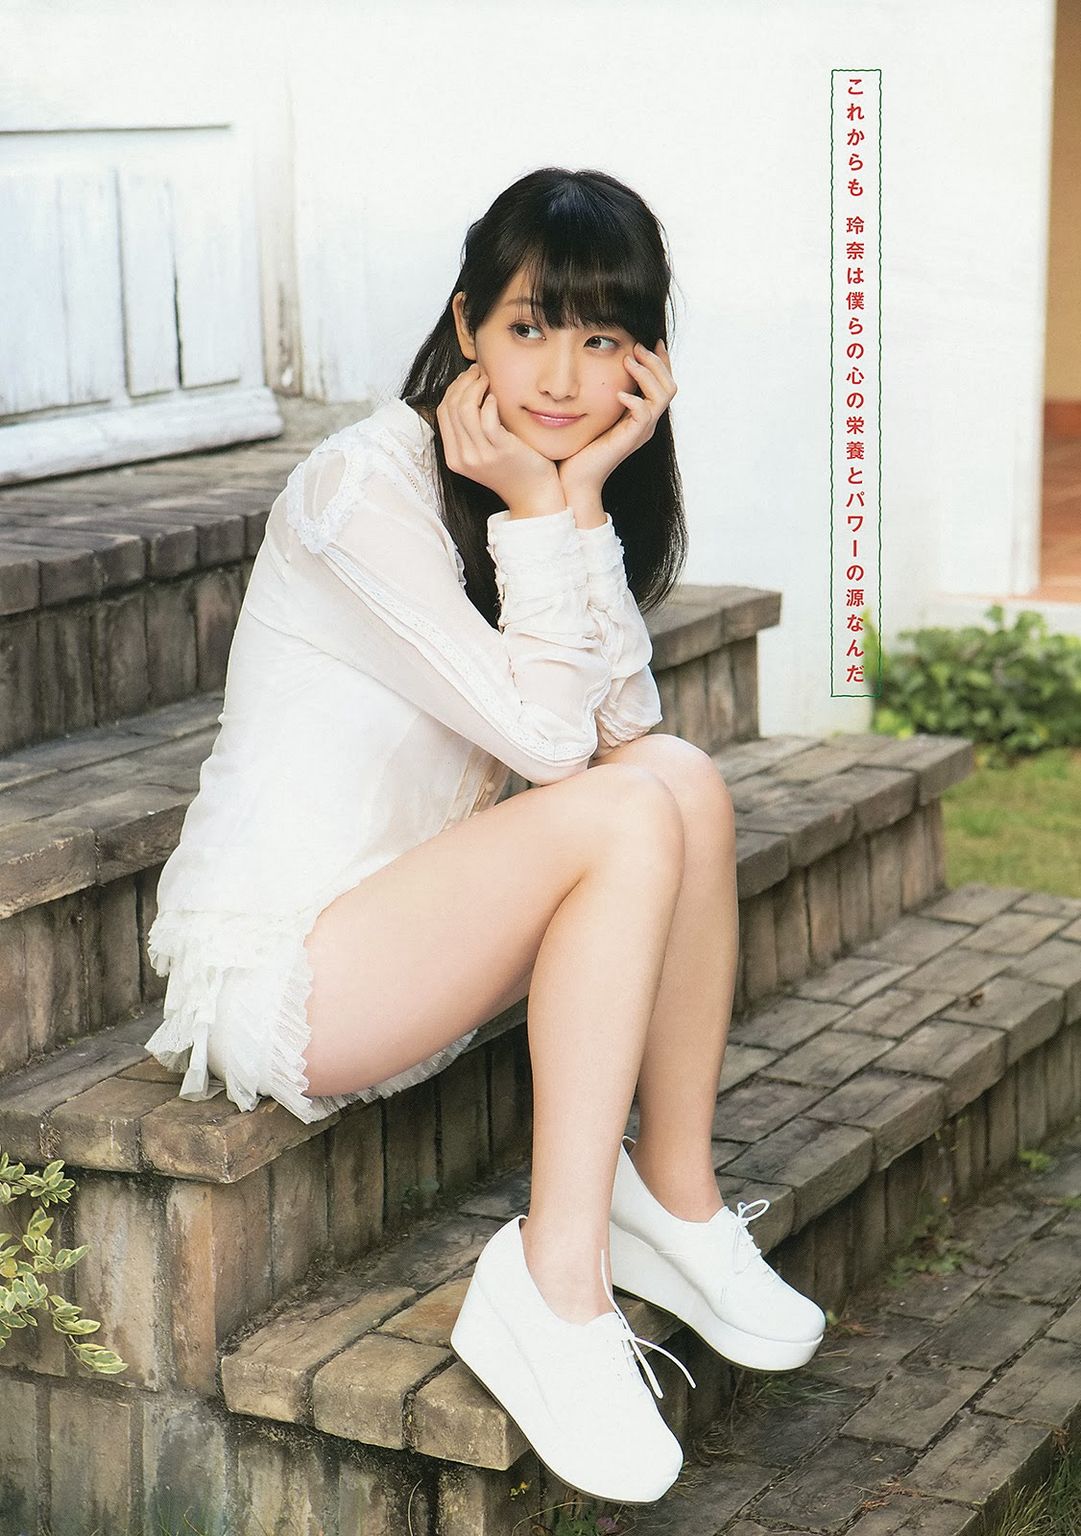 SKE48 Rena Matsui Tomato on Young Animal Magazine  - RENA MATSUI -  Gallery - Hello!Online